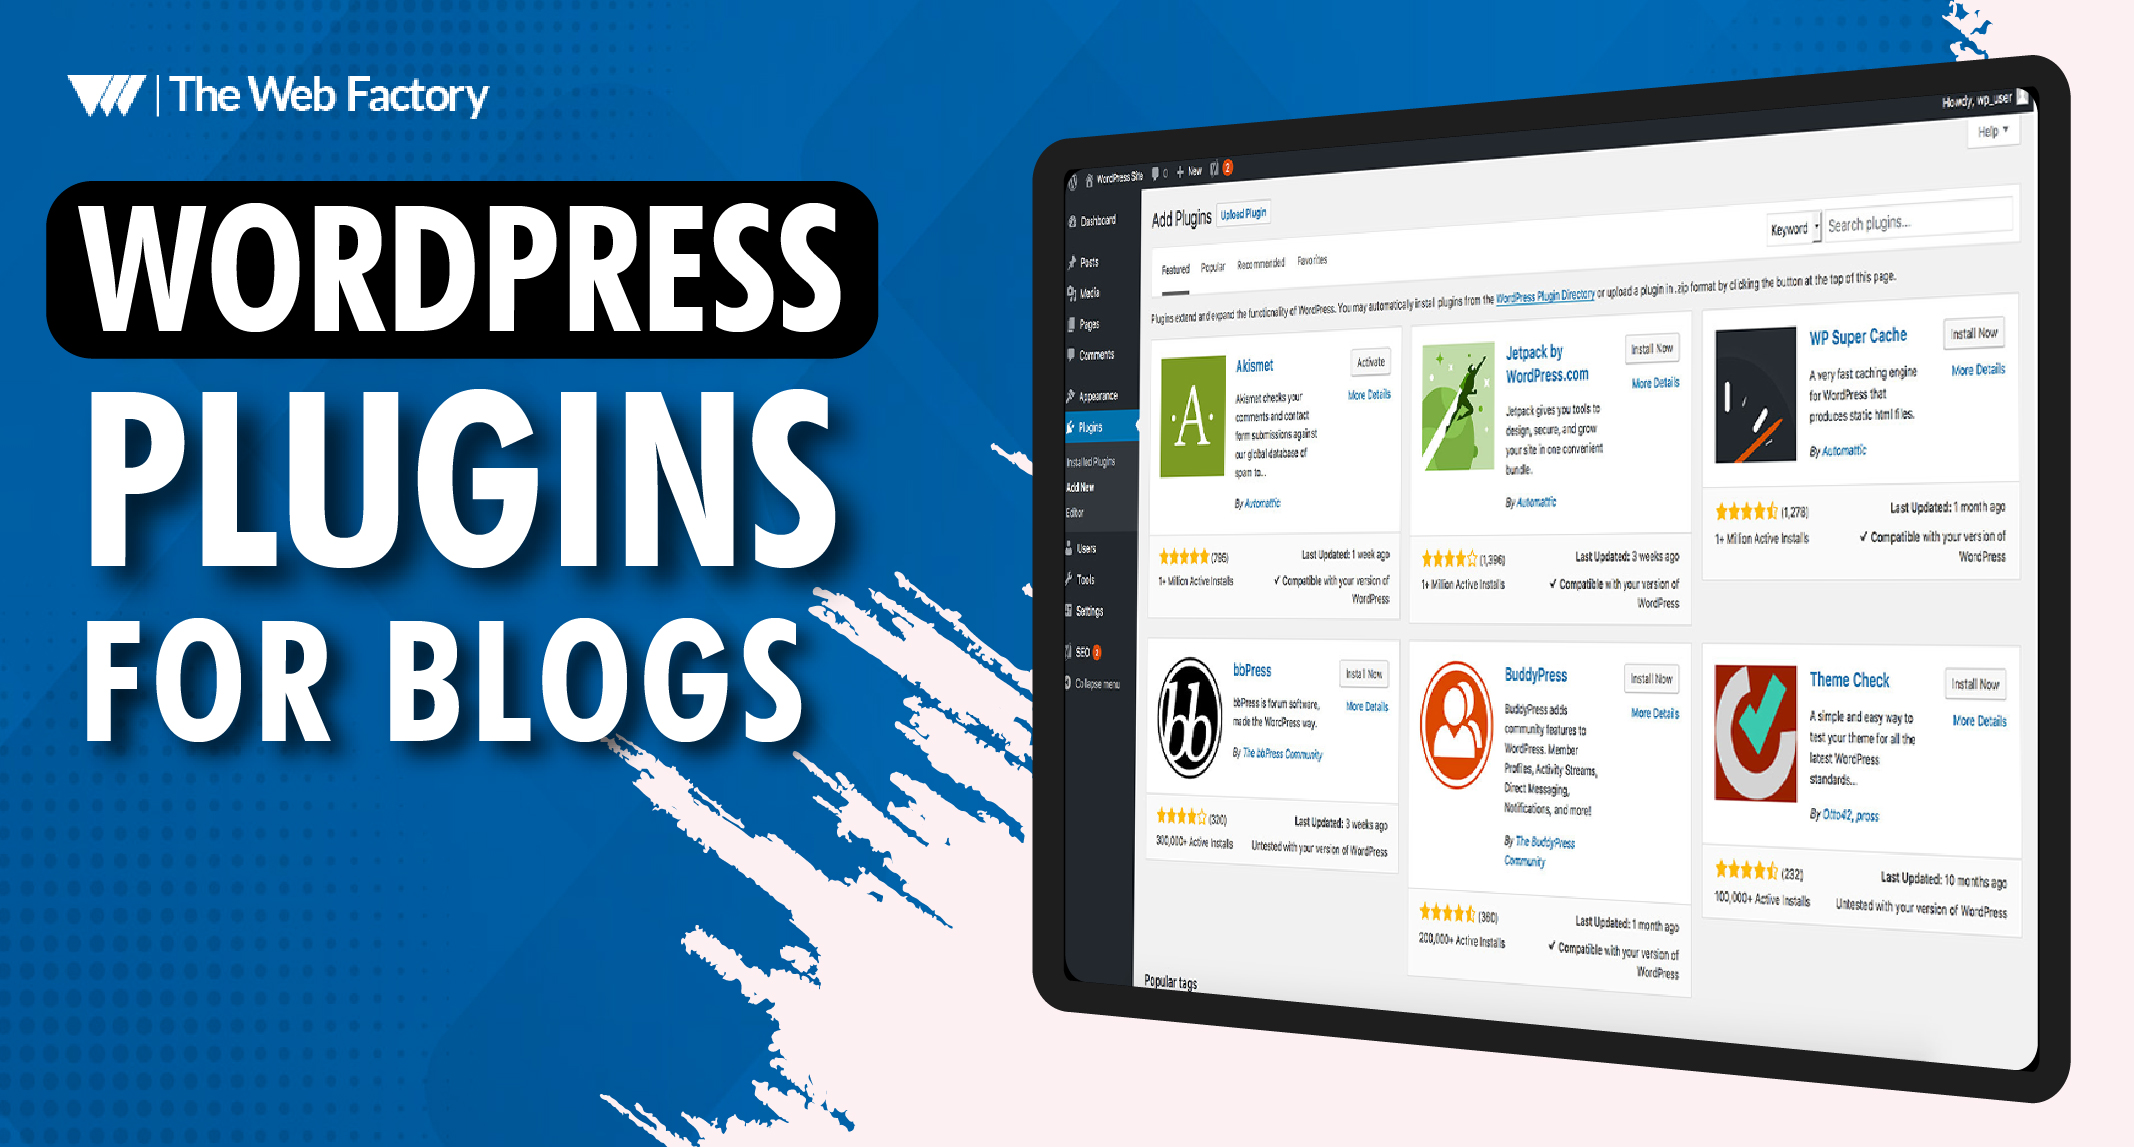 WordPress Plugins for Blogs